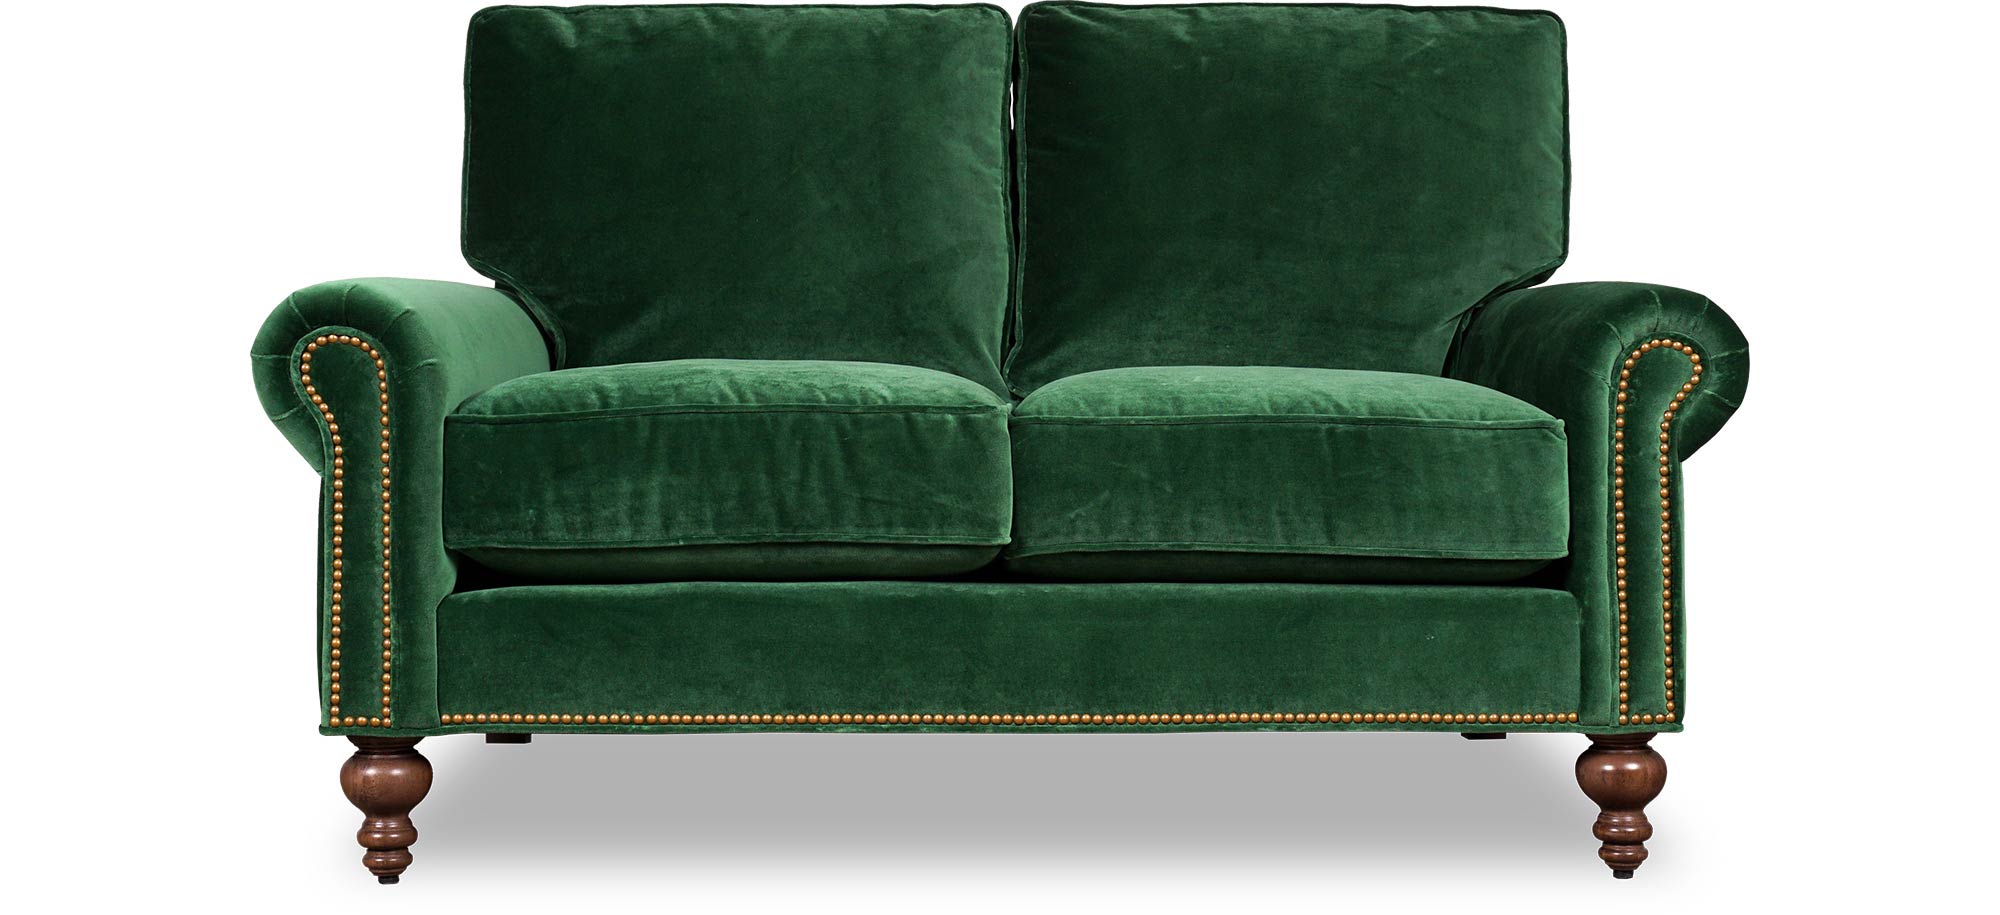 58 Didi in Como Emerald green velvet